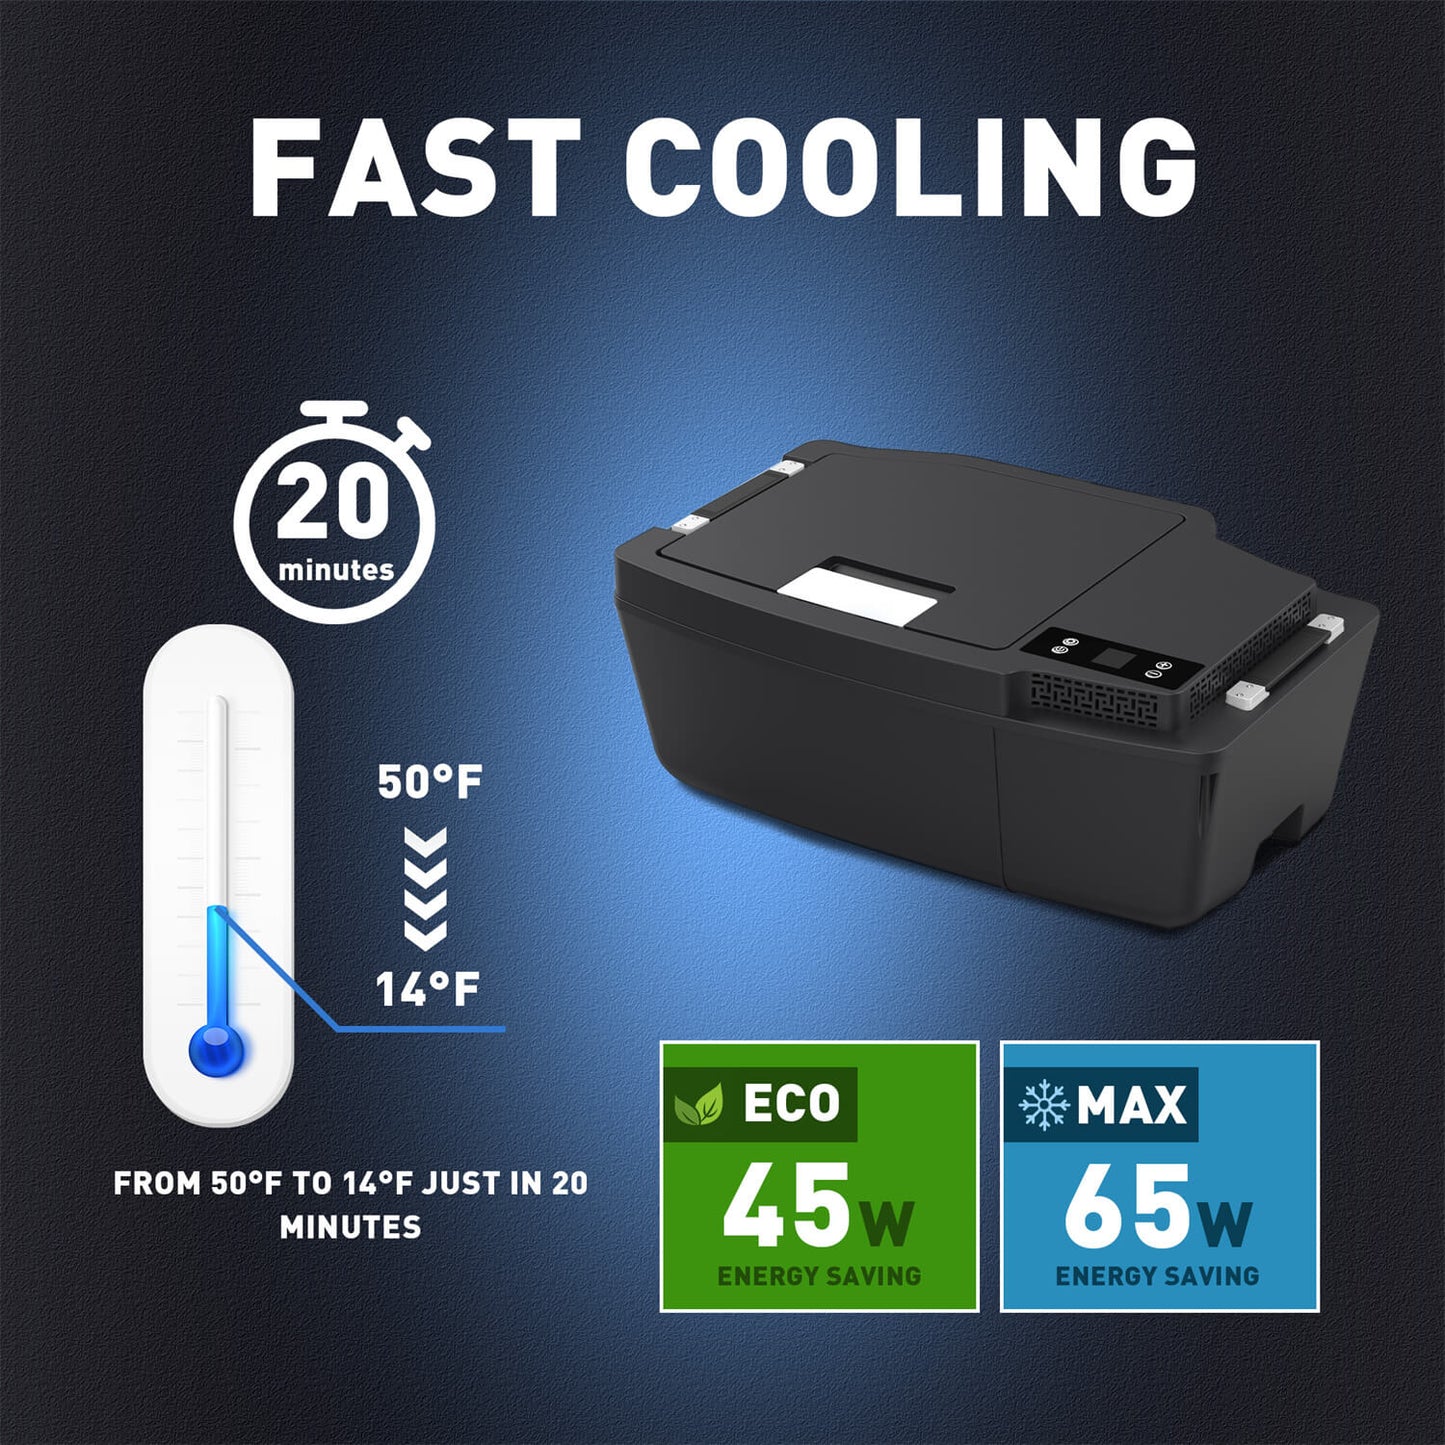 Portable freezer specially designed for Tesla Model 3 fast cooling ECO